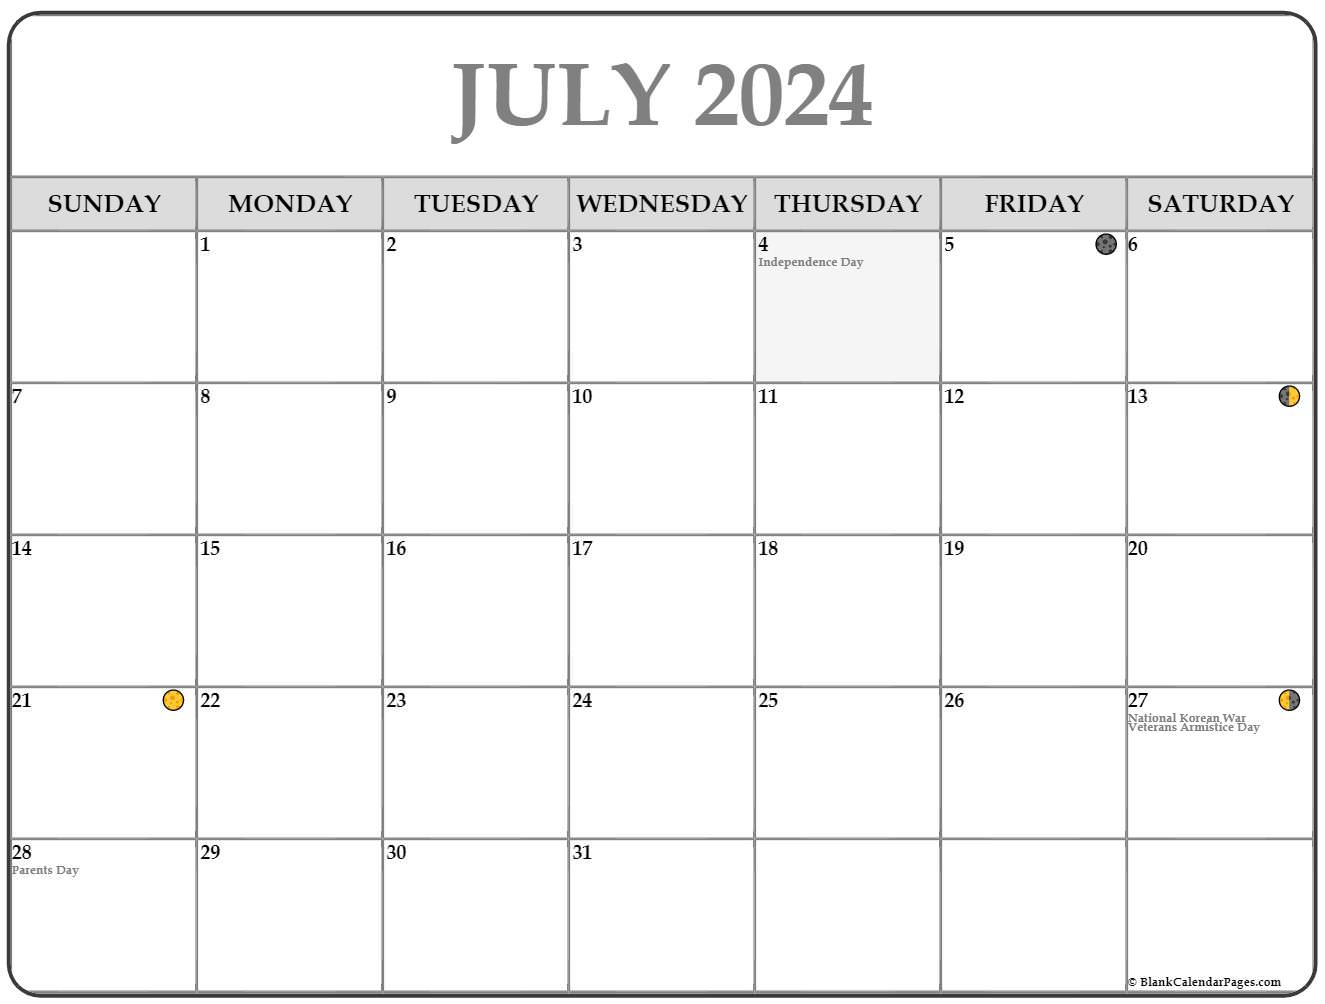 July 2024 Lunar Calendar | Moon Phase Calendar for July Moon Phase Calendar 2024